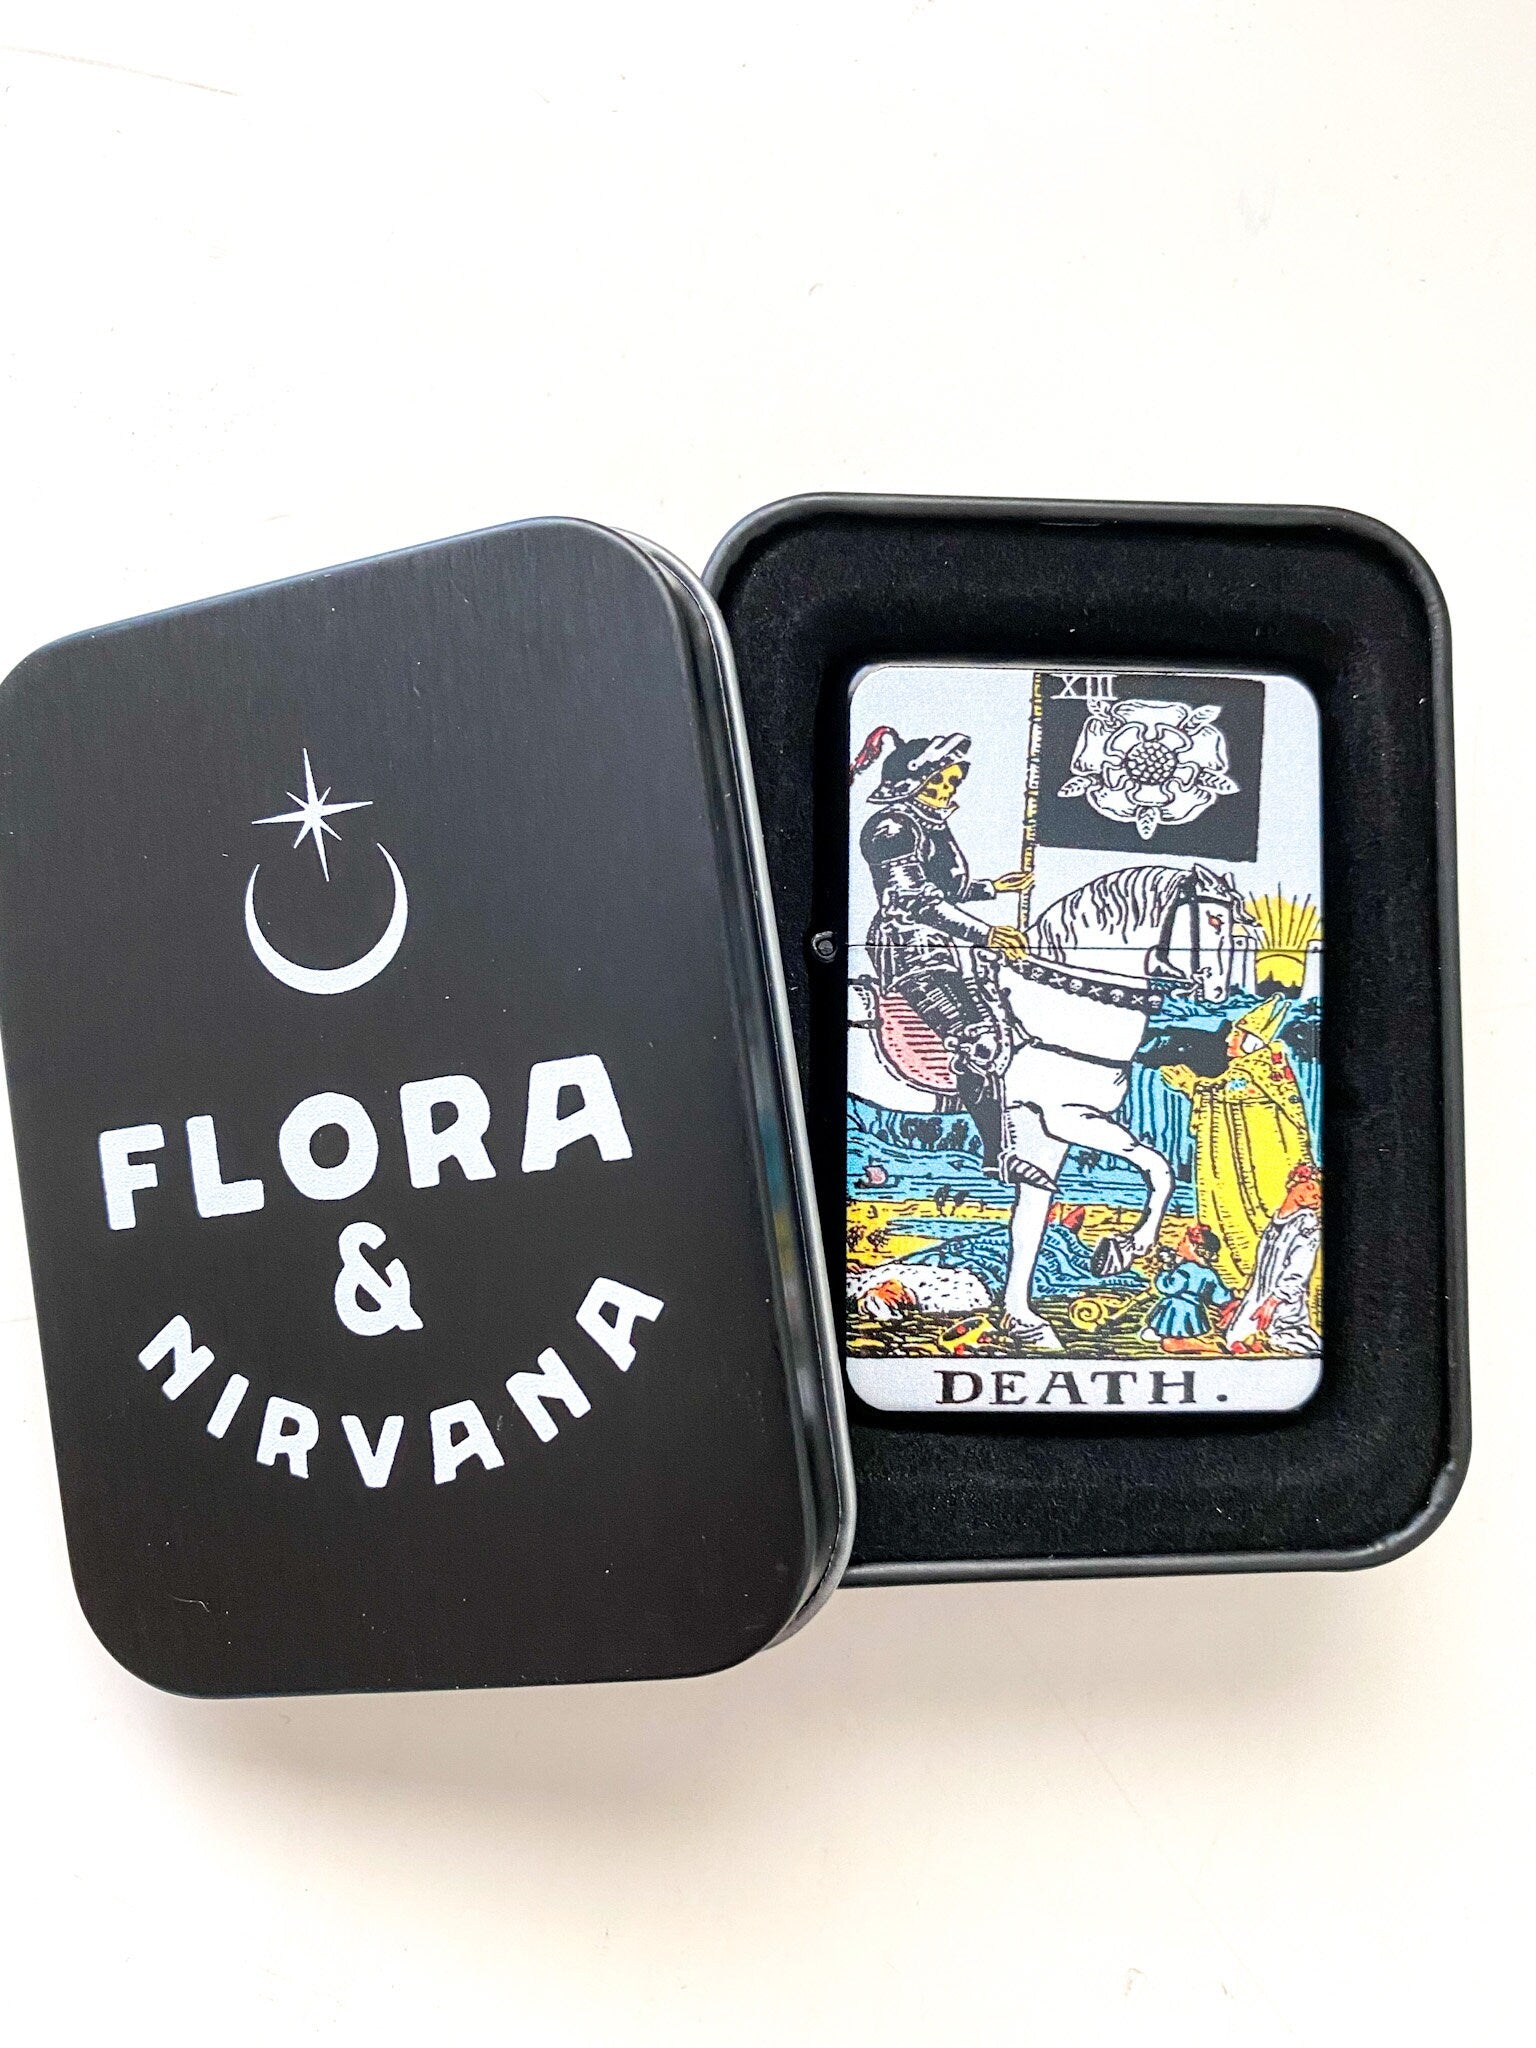 Death Tarot Card Windproof Flip Top Lighter - Flora and Nirvana